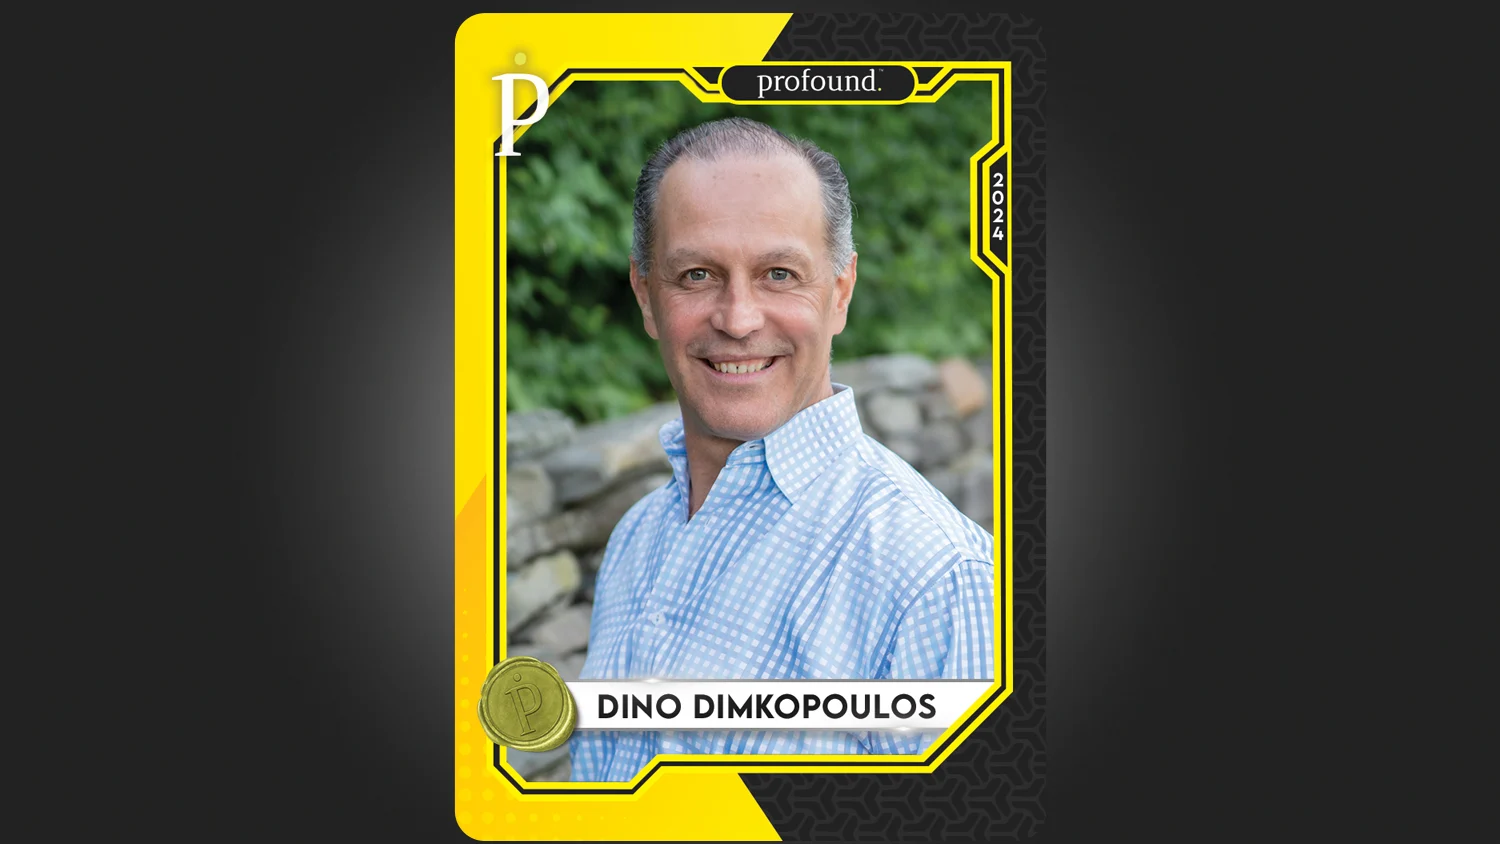 Dino Dimkopoulos